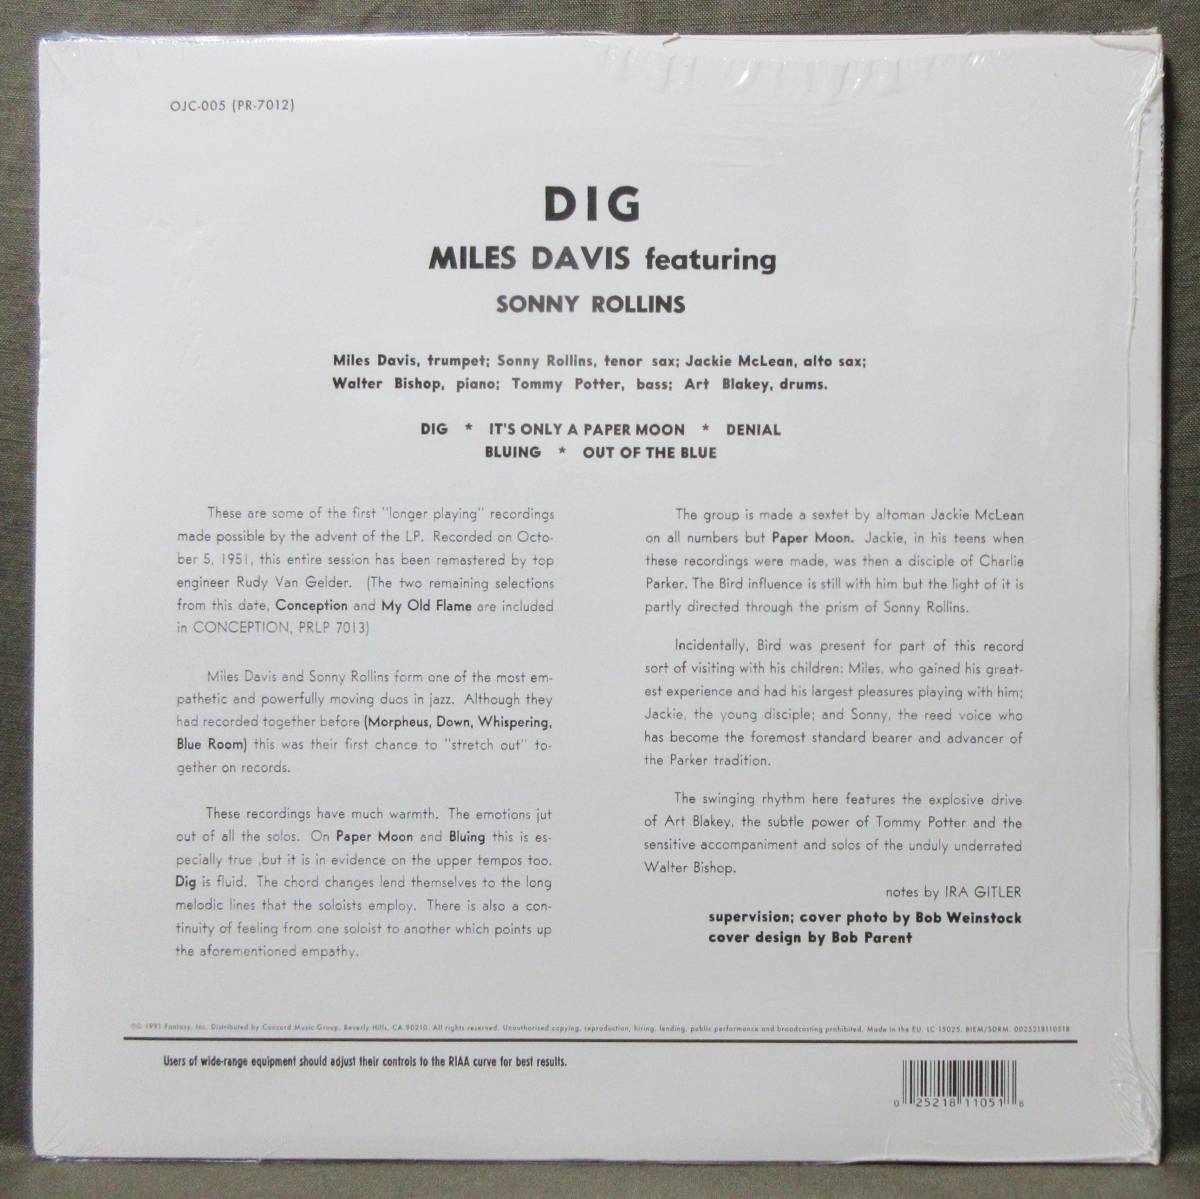 (LP) 未開封OJC MILES DAVIS Featuring SONNY ROLLINS [DIG] Jackie McLean/Art Blakey/シールド新品/OJC-005(PR-7012)_画像2